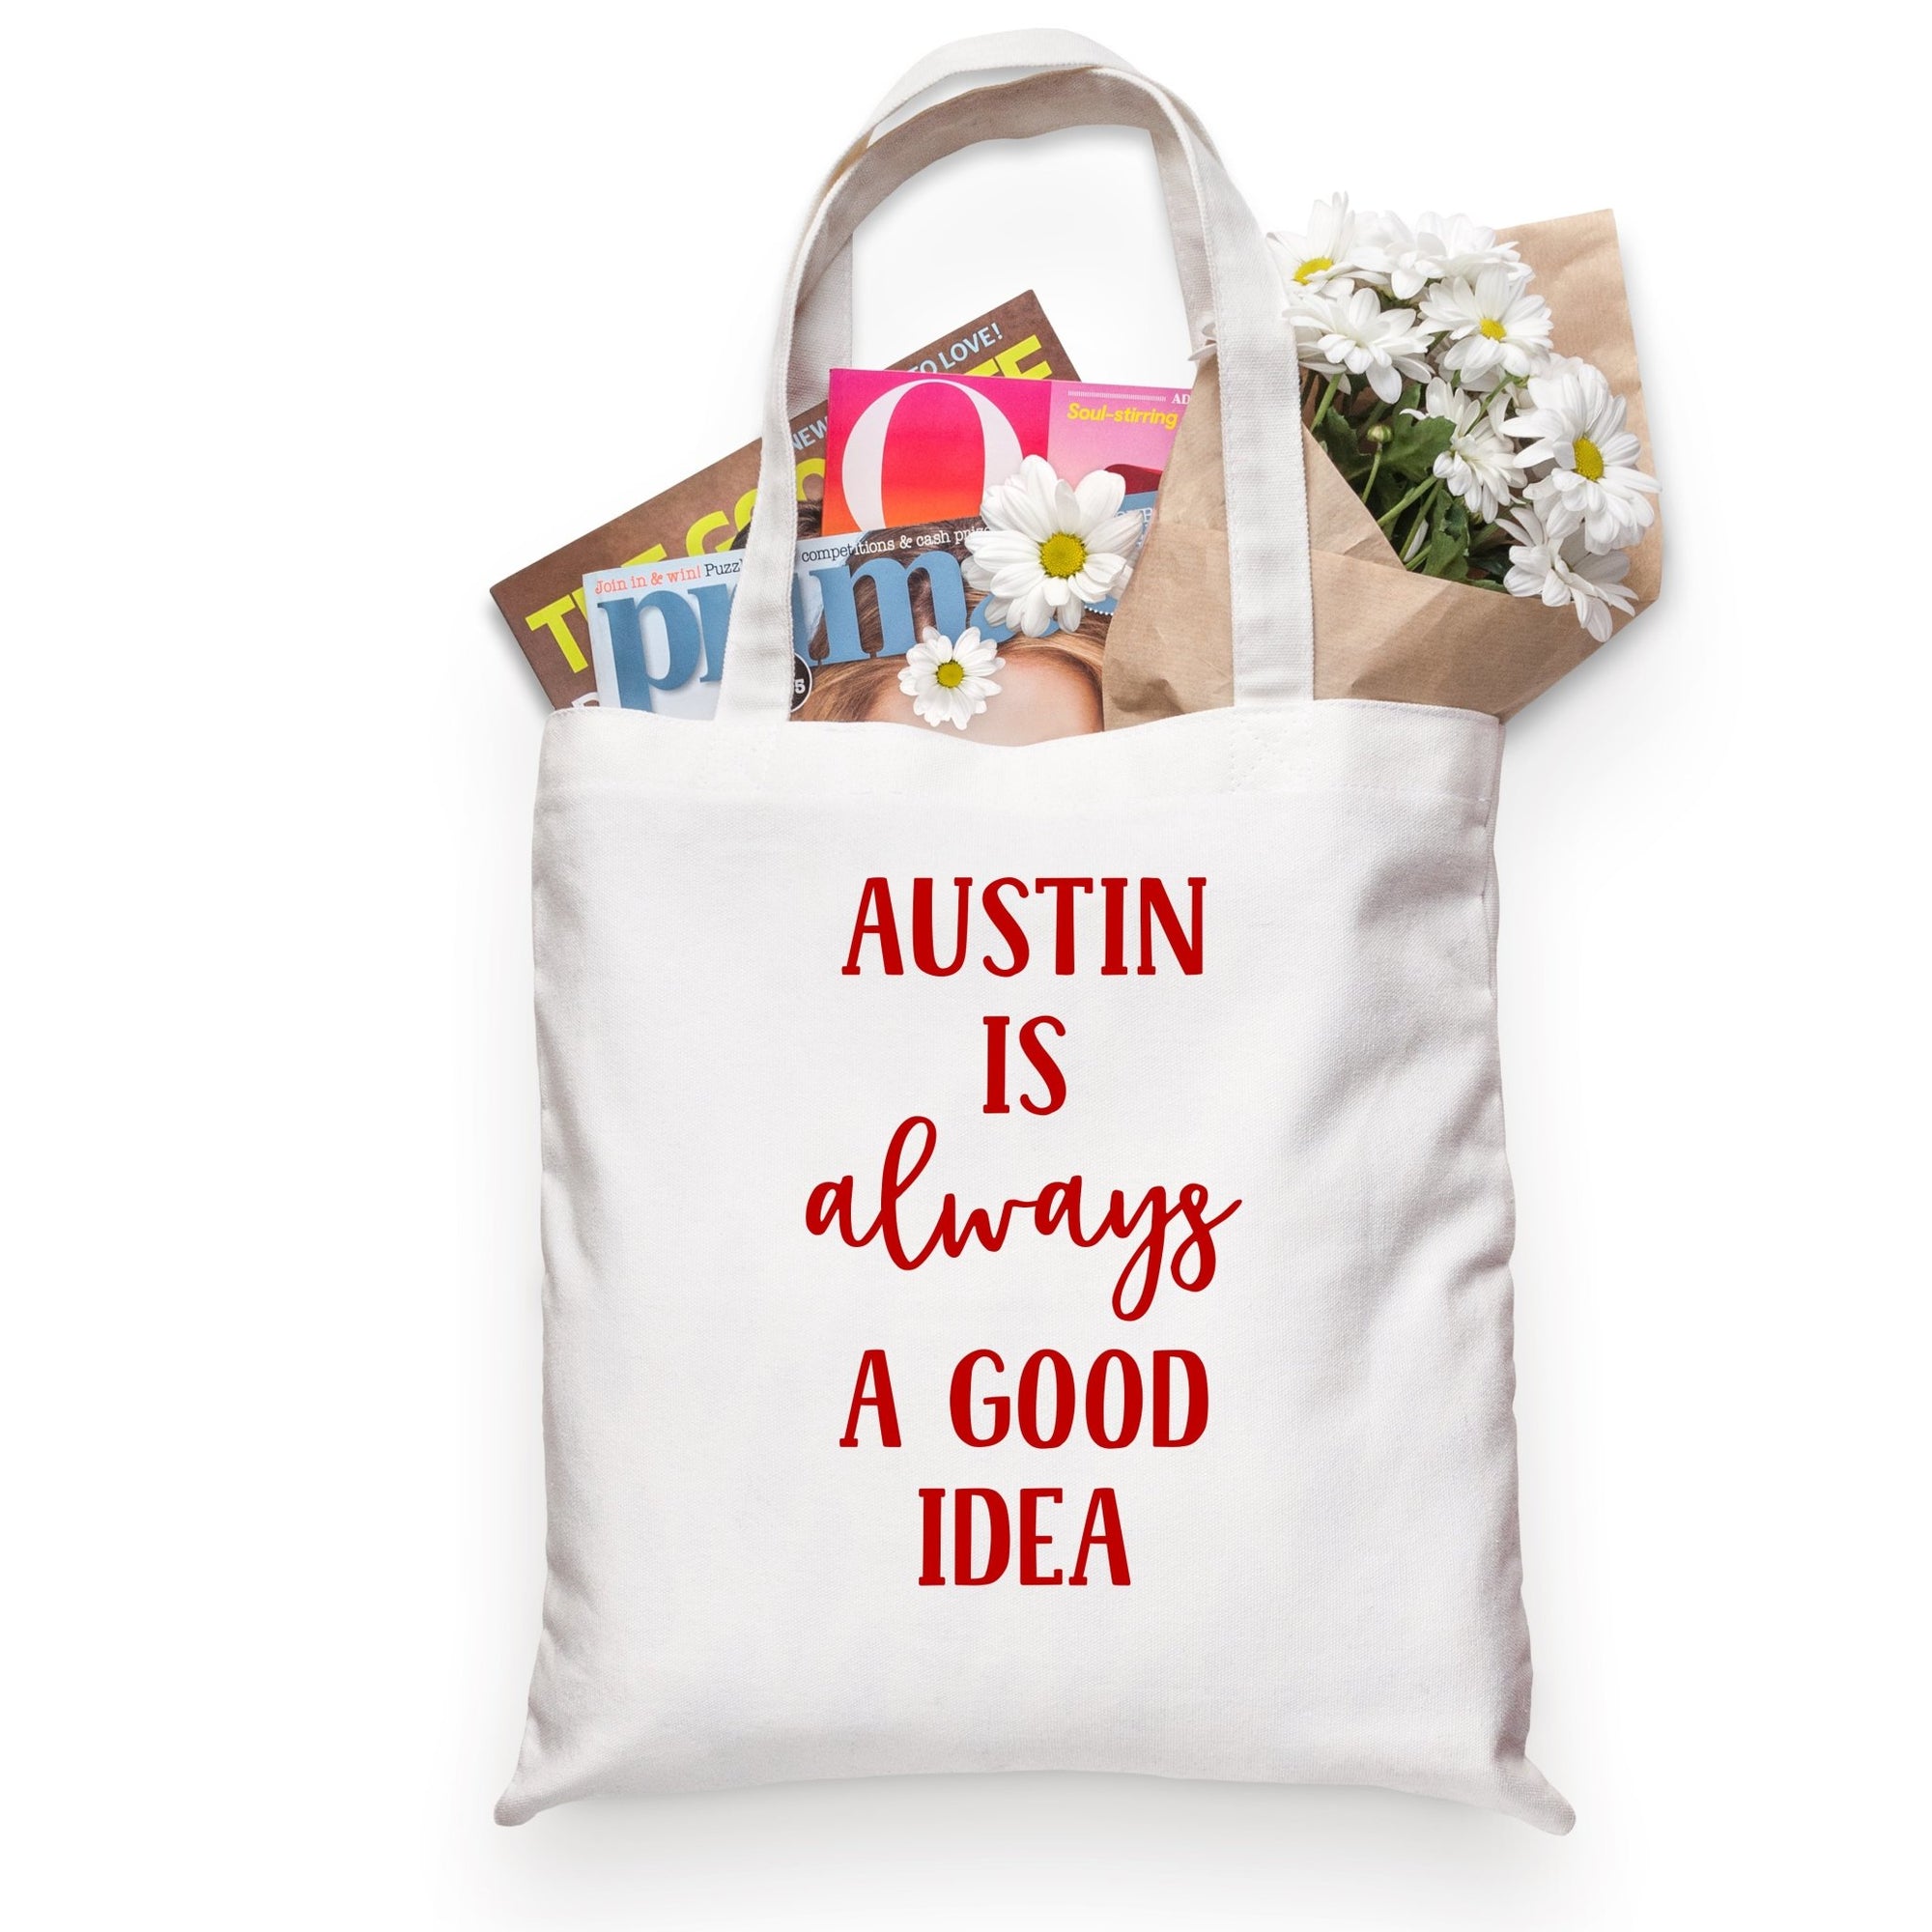 A custom tote bag reads "Austin is always a good idea"